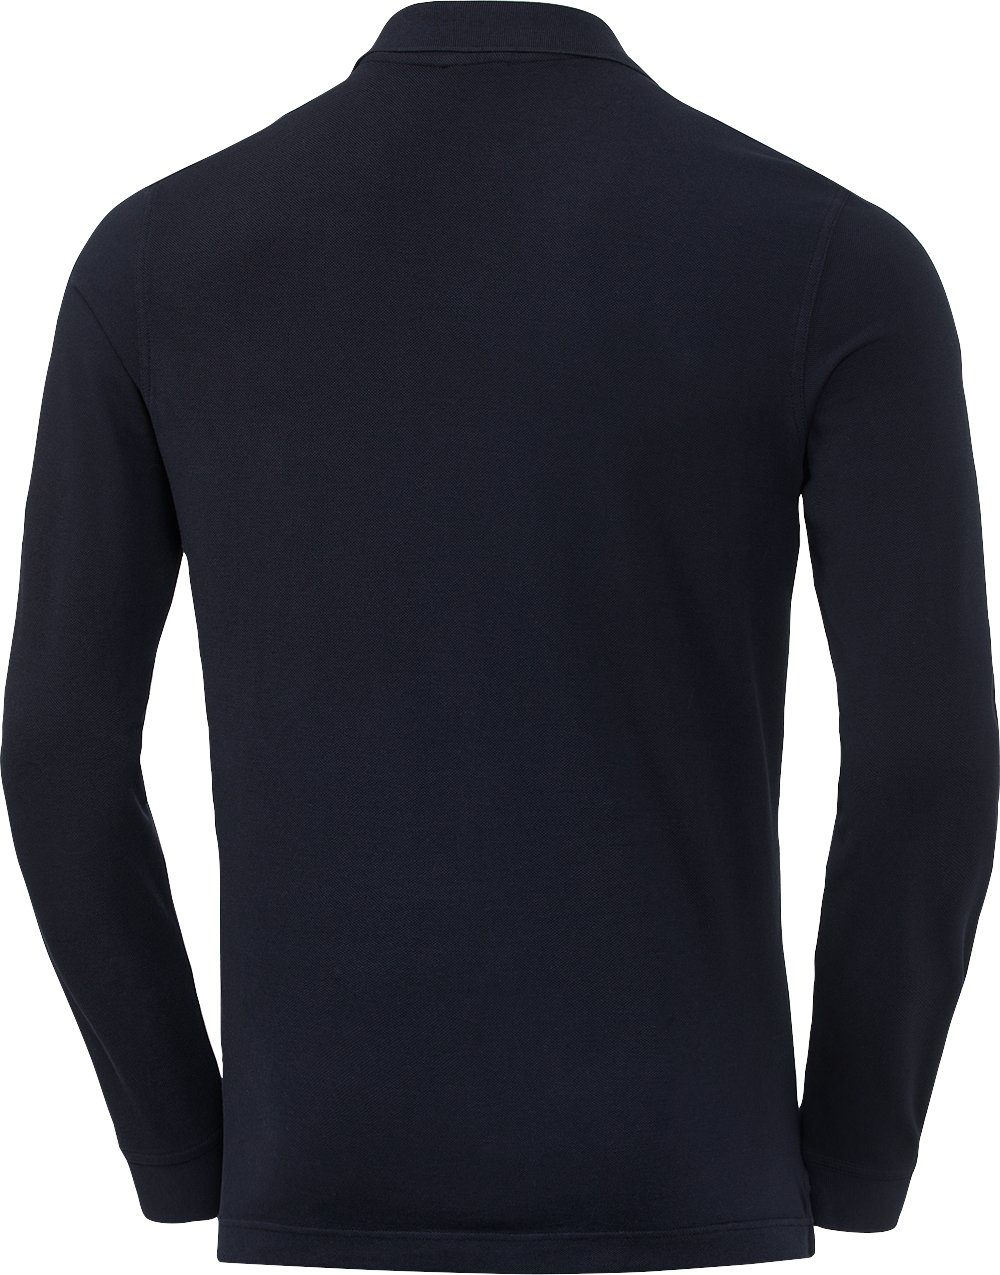 Langarm-Poloshirt of Baumwolle Benetton marine Colors United aus